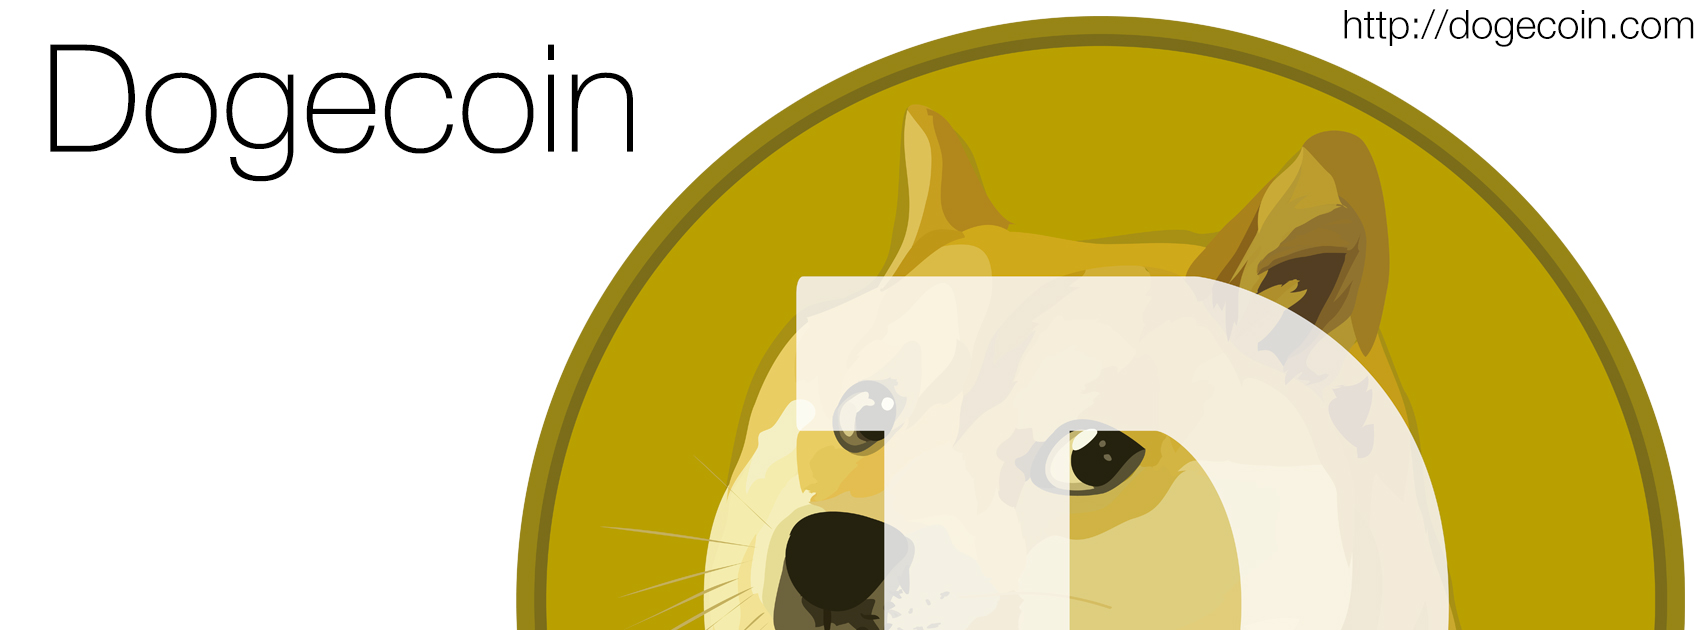 Basic Dogecoin Facebook Cover Image